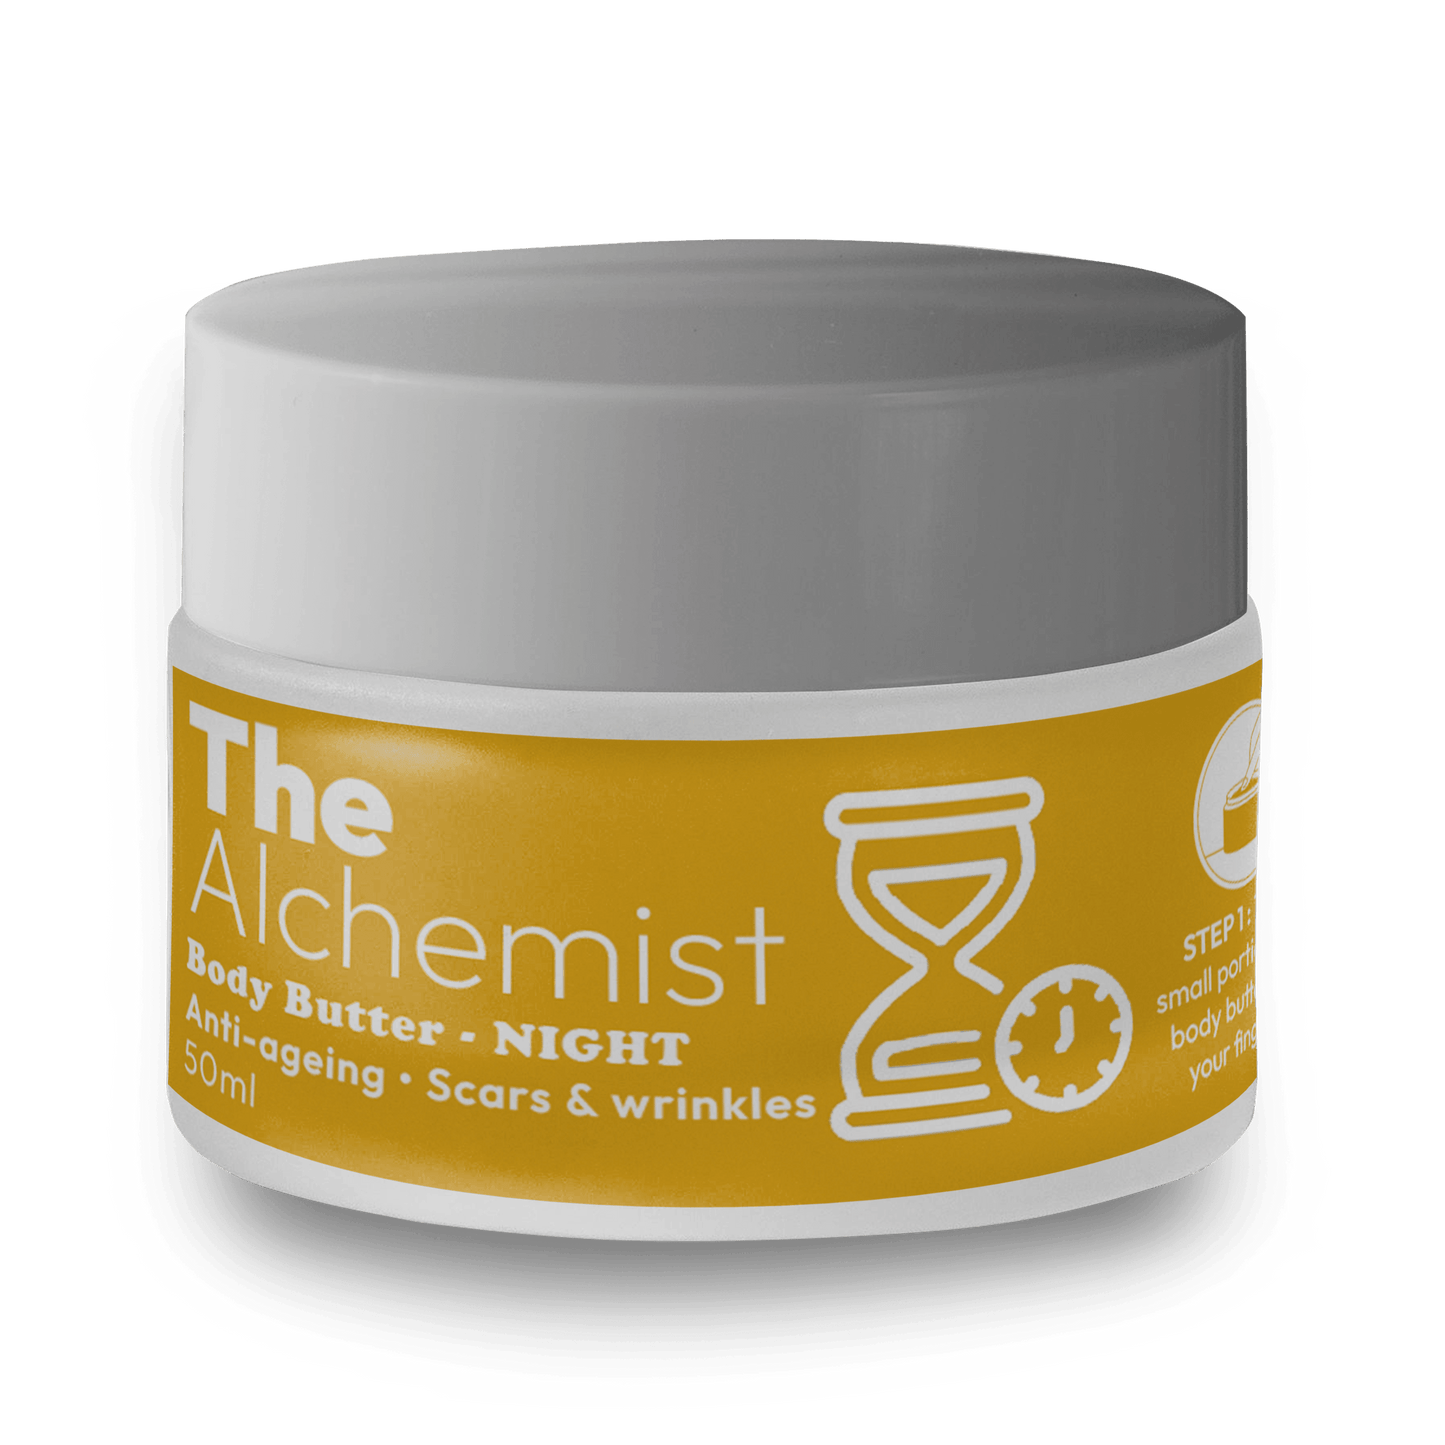 The Alchemist - Shea Skin Anti-ageing Body Butter TAL